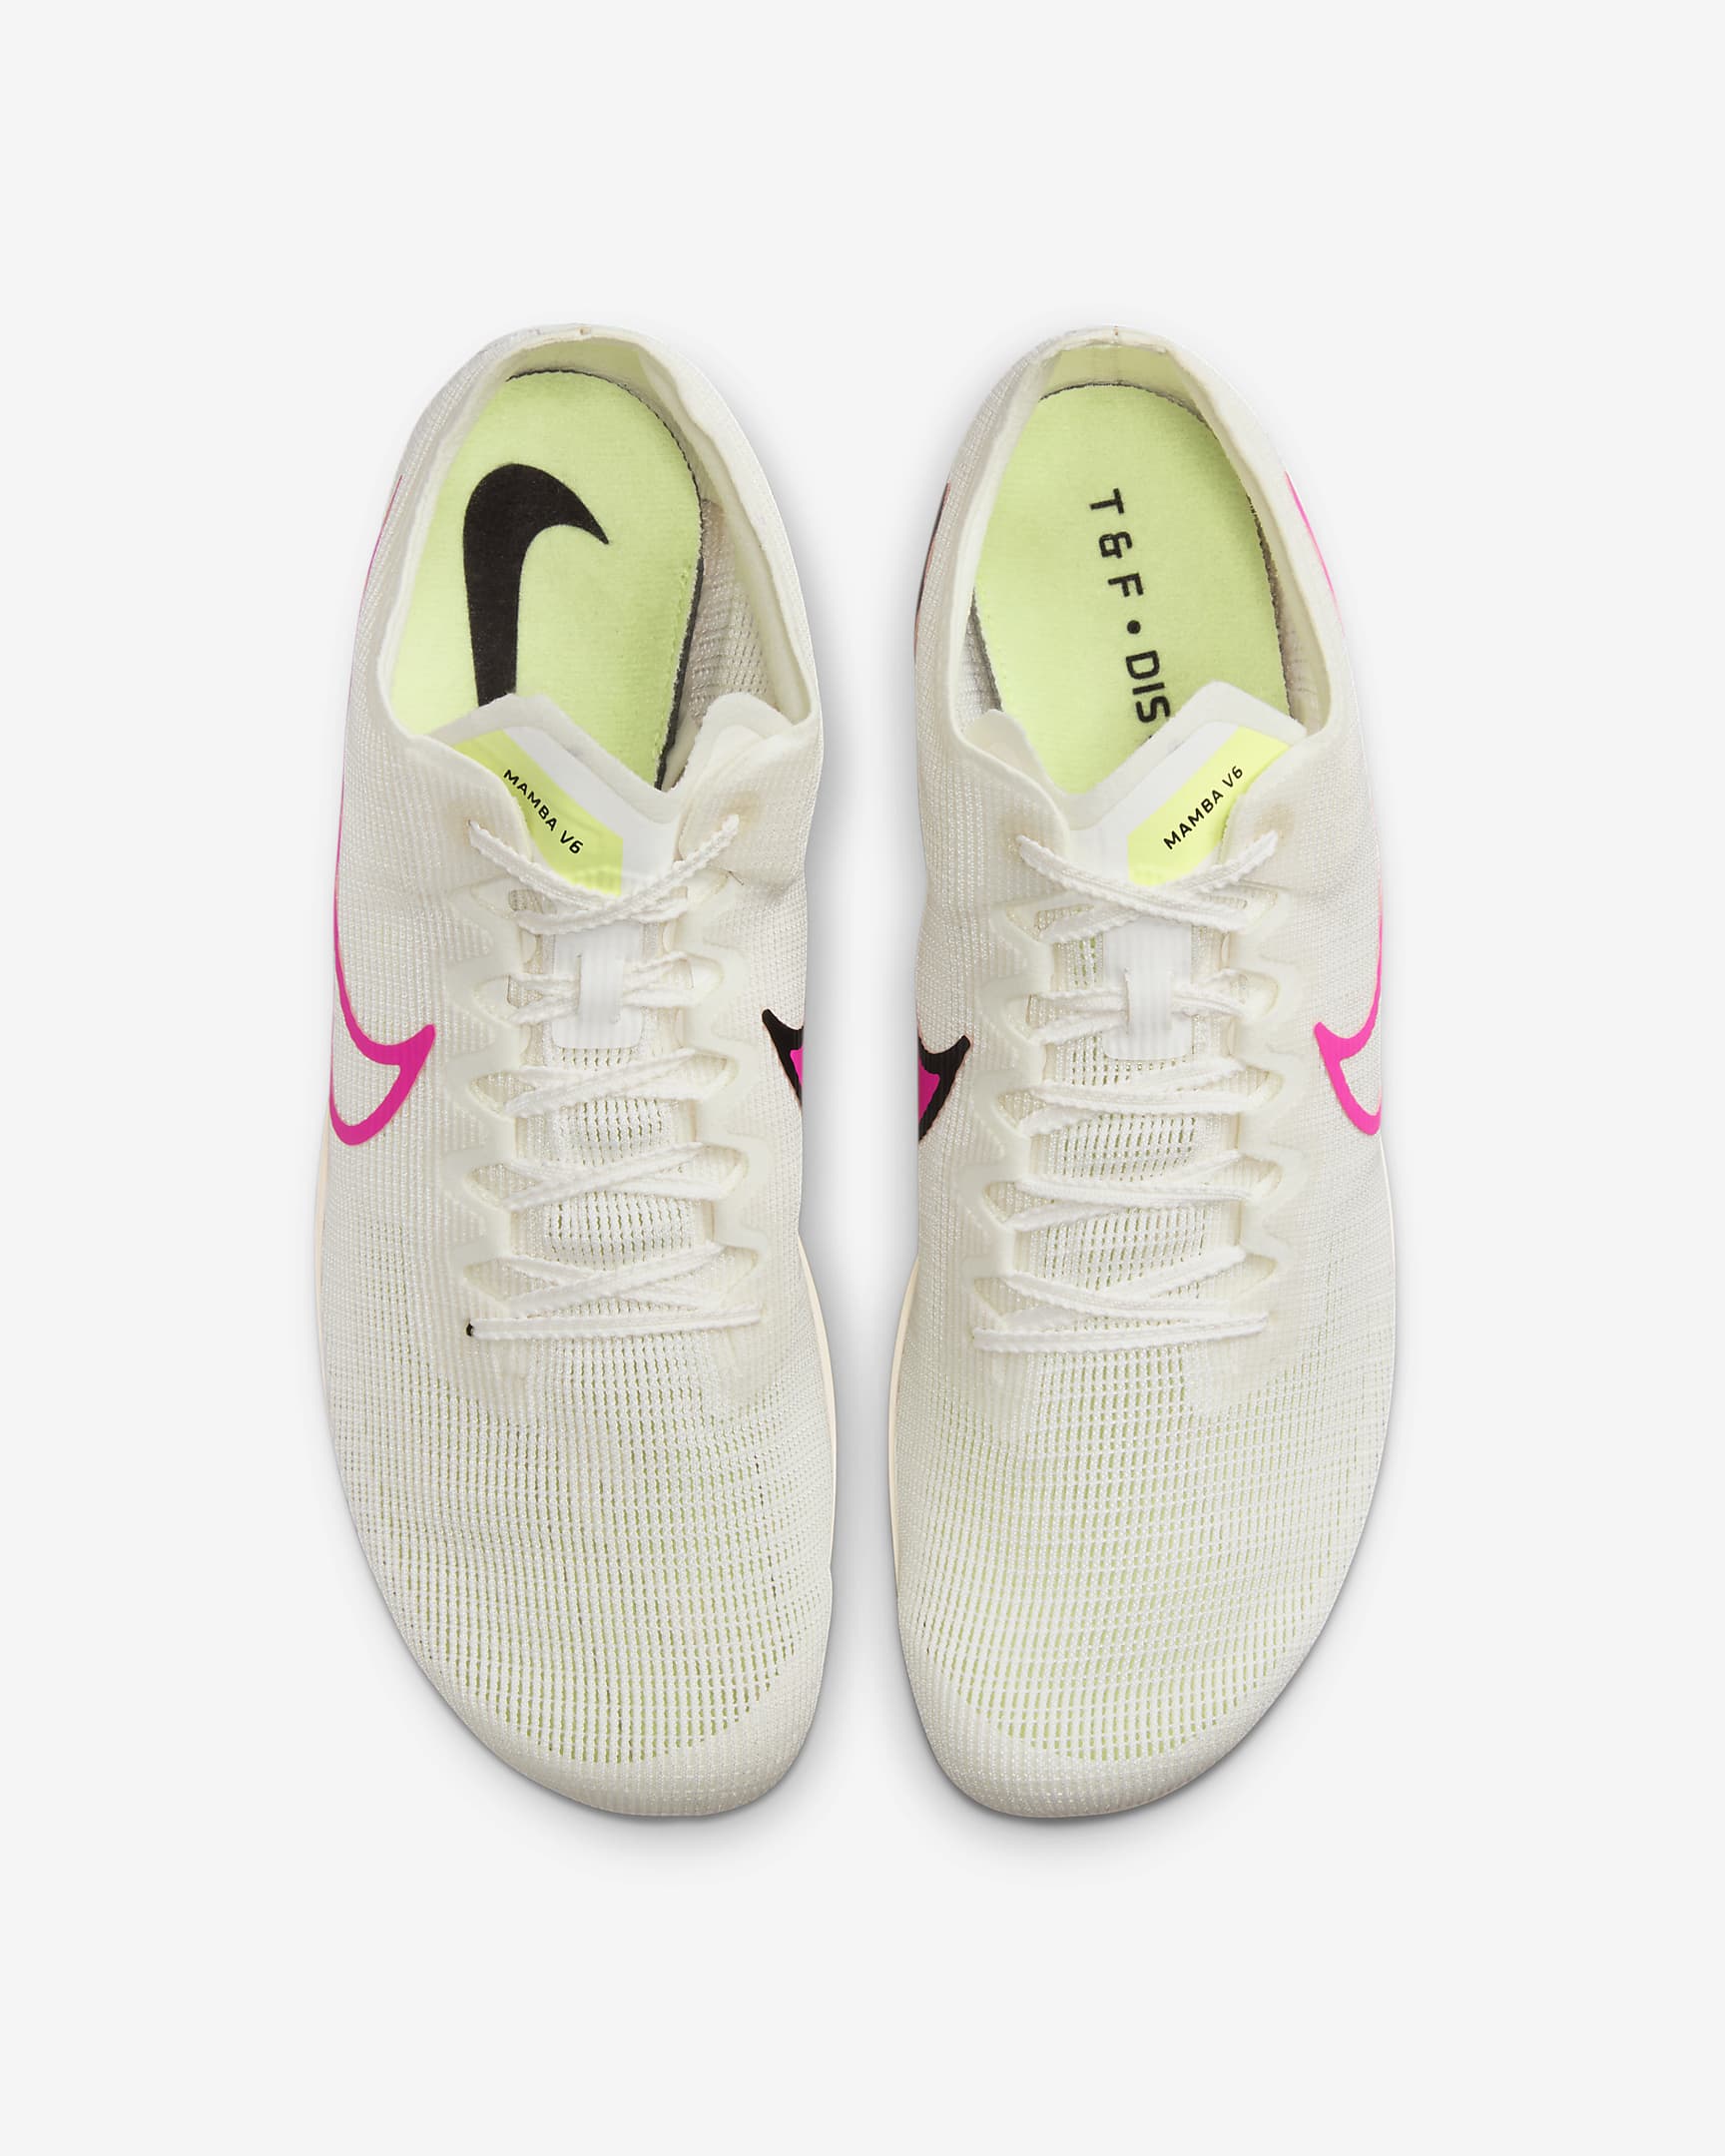 Nike Zoom Mamba 6 Track and Field distance spikes - Sail/Light Lemon Twist/Guava Ice/Fierce Pink